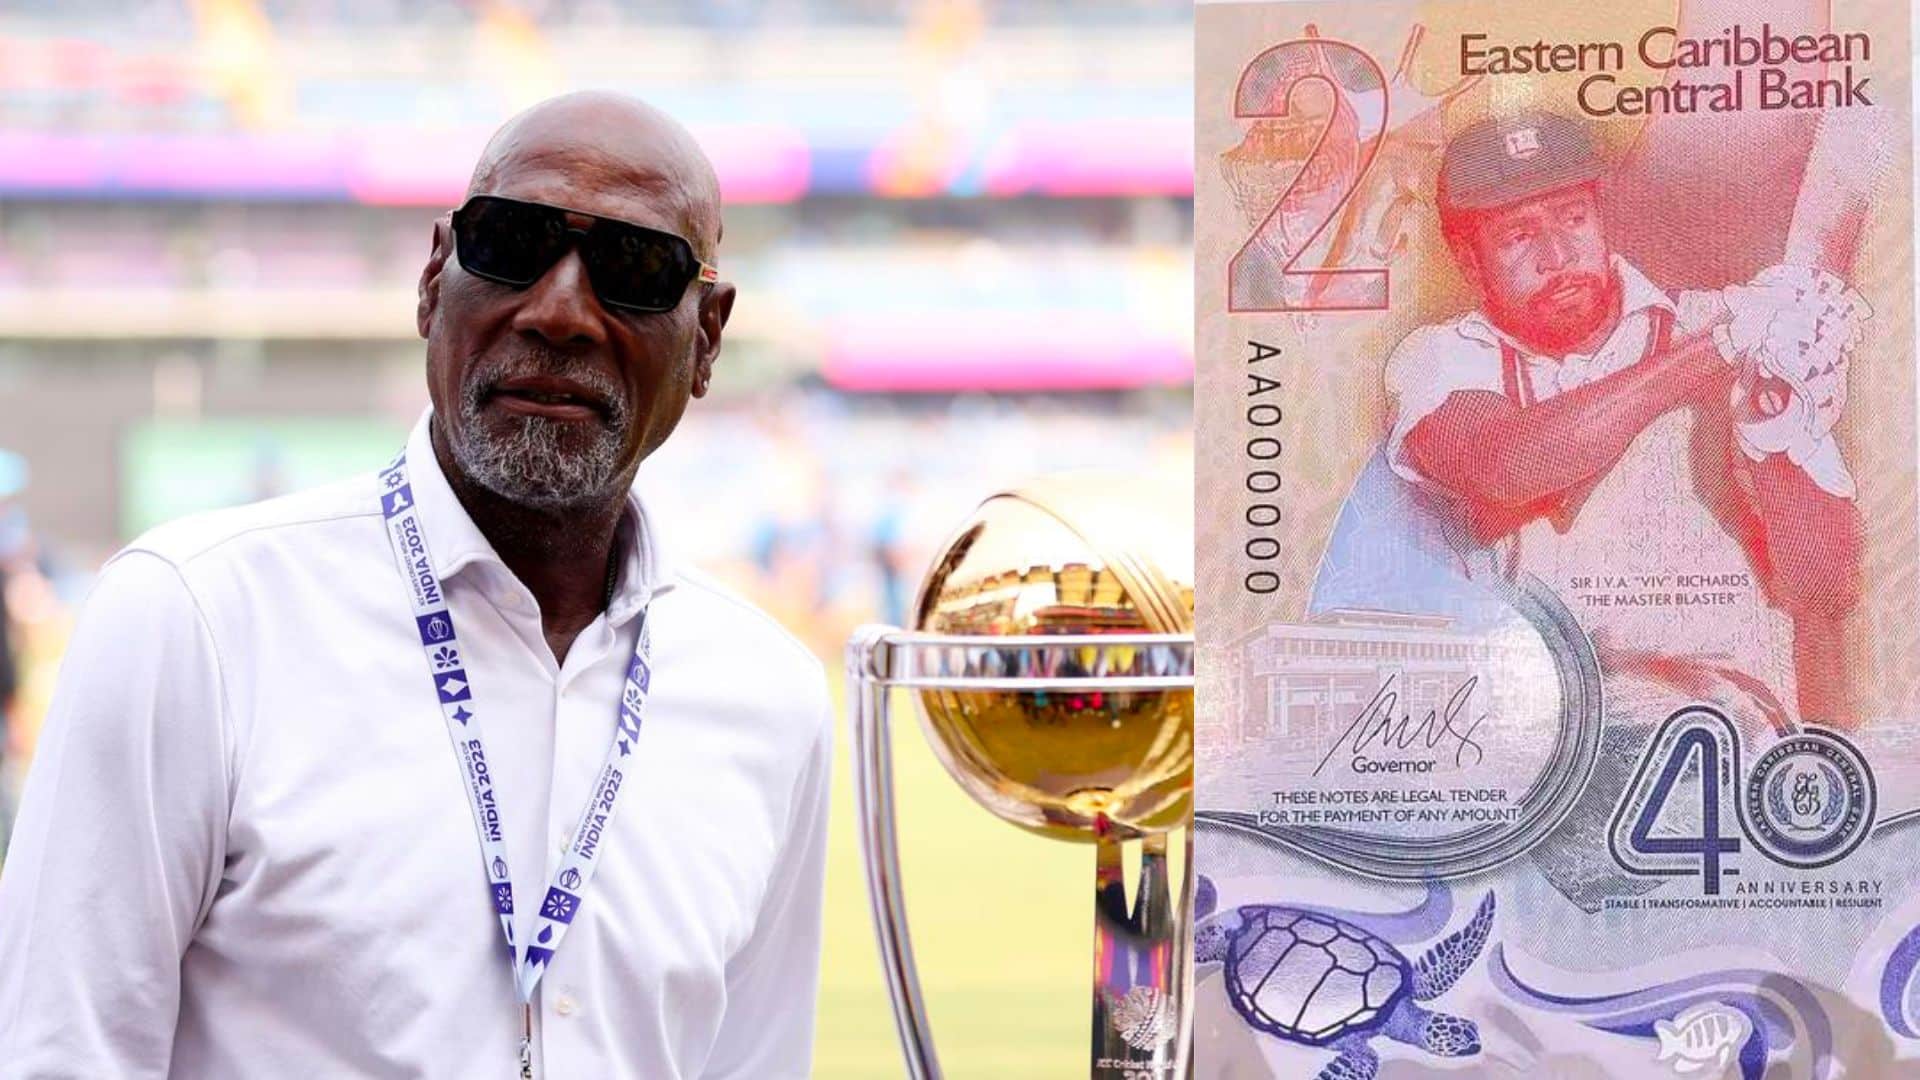 West Indies Legend Viv Richard Portrayed On Eastern Caribbean Central Bank's Note